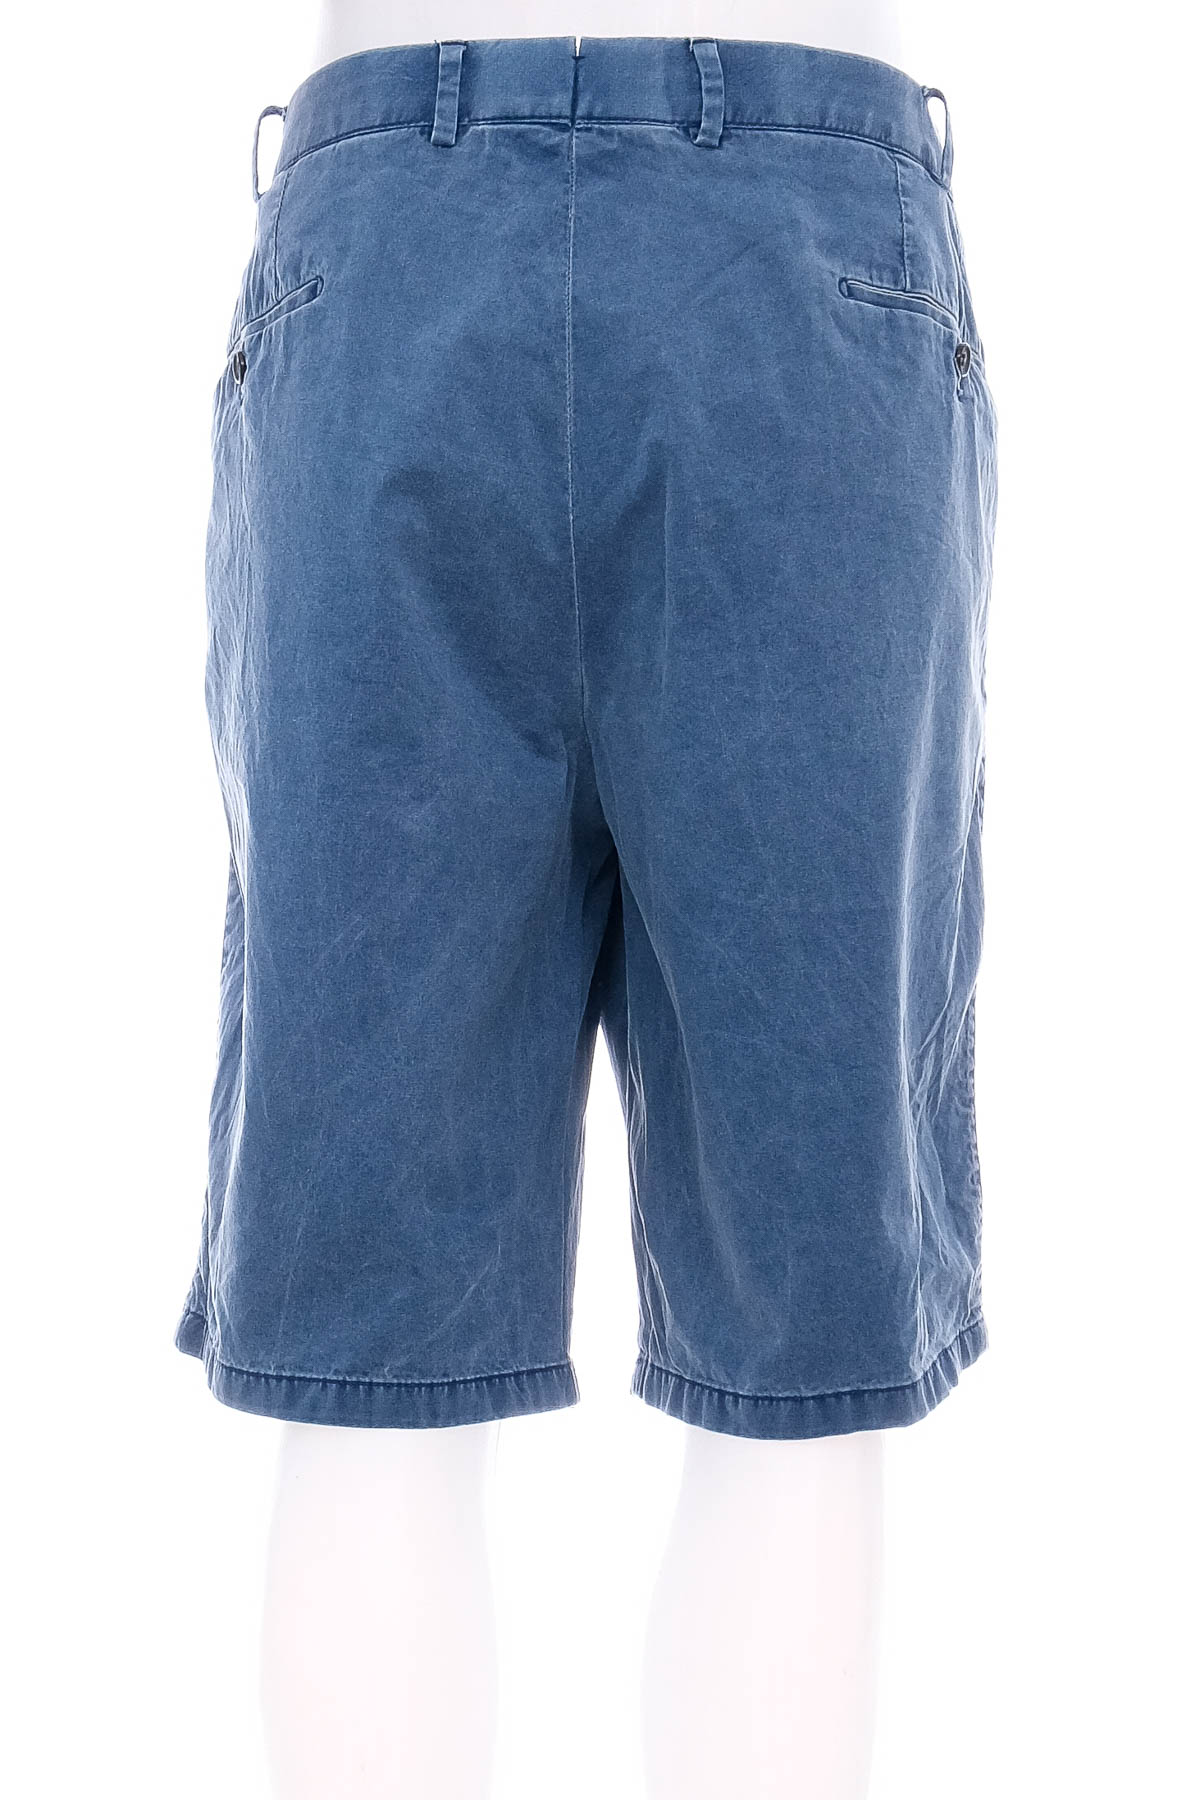 Men's shorts - Hiltl - 1